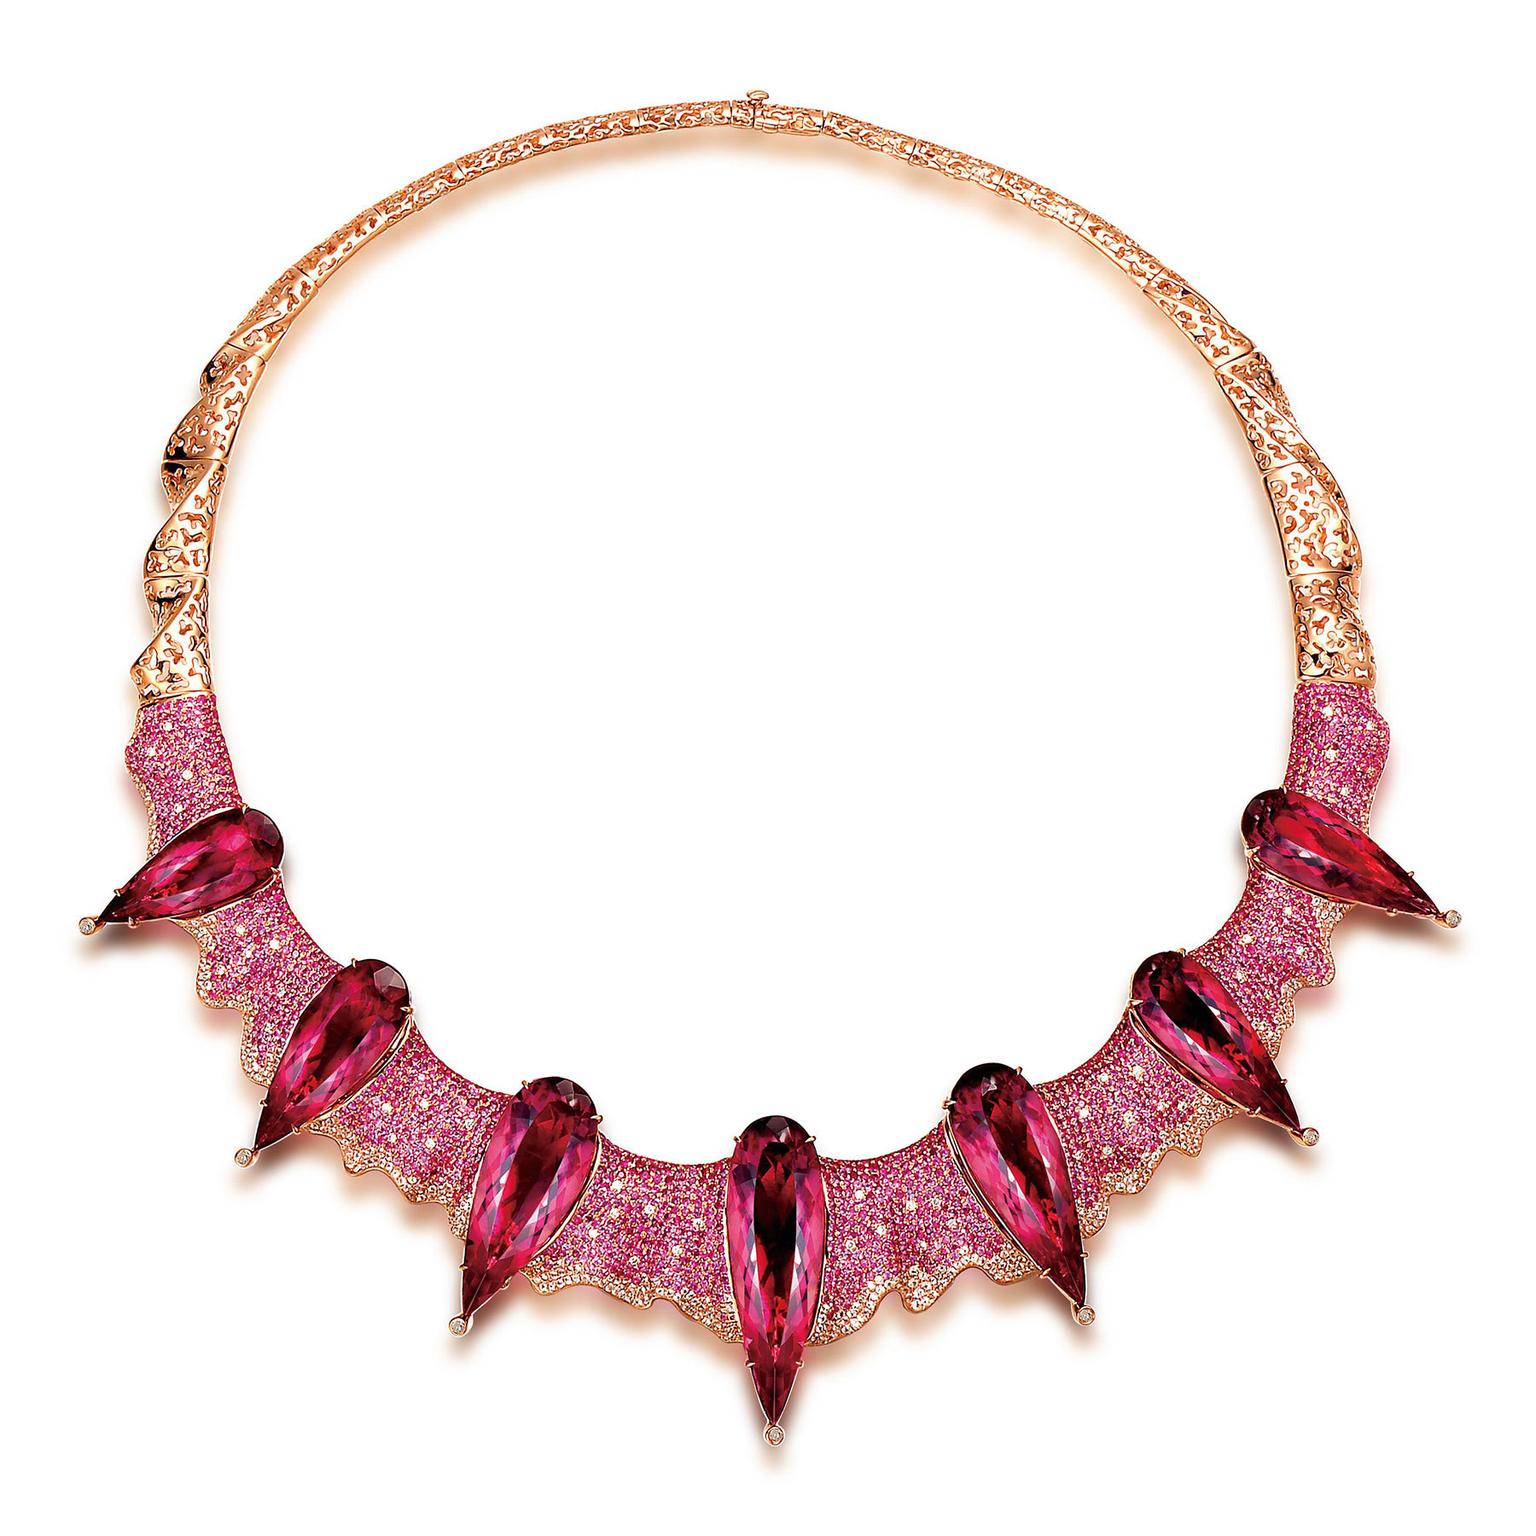 Fei Lui rubellite, pink sapphire and diamond neckpiece